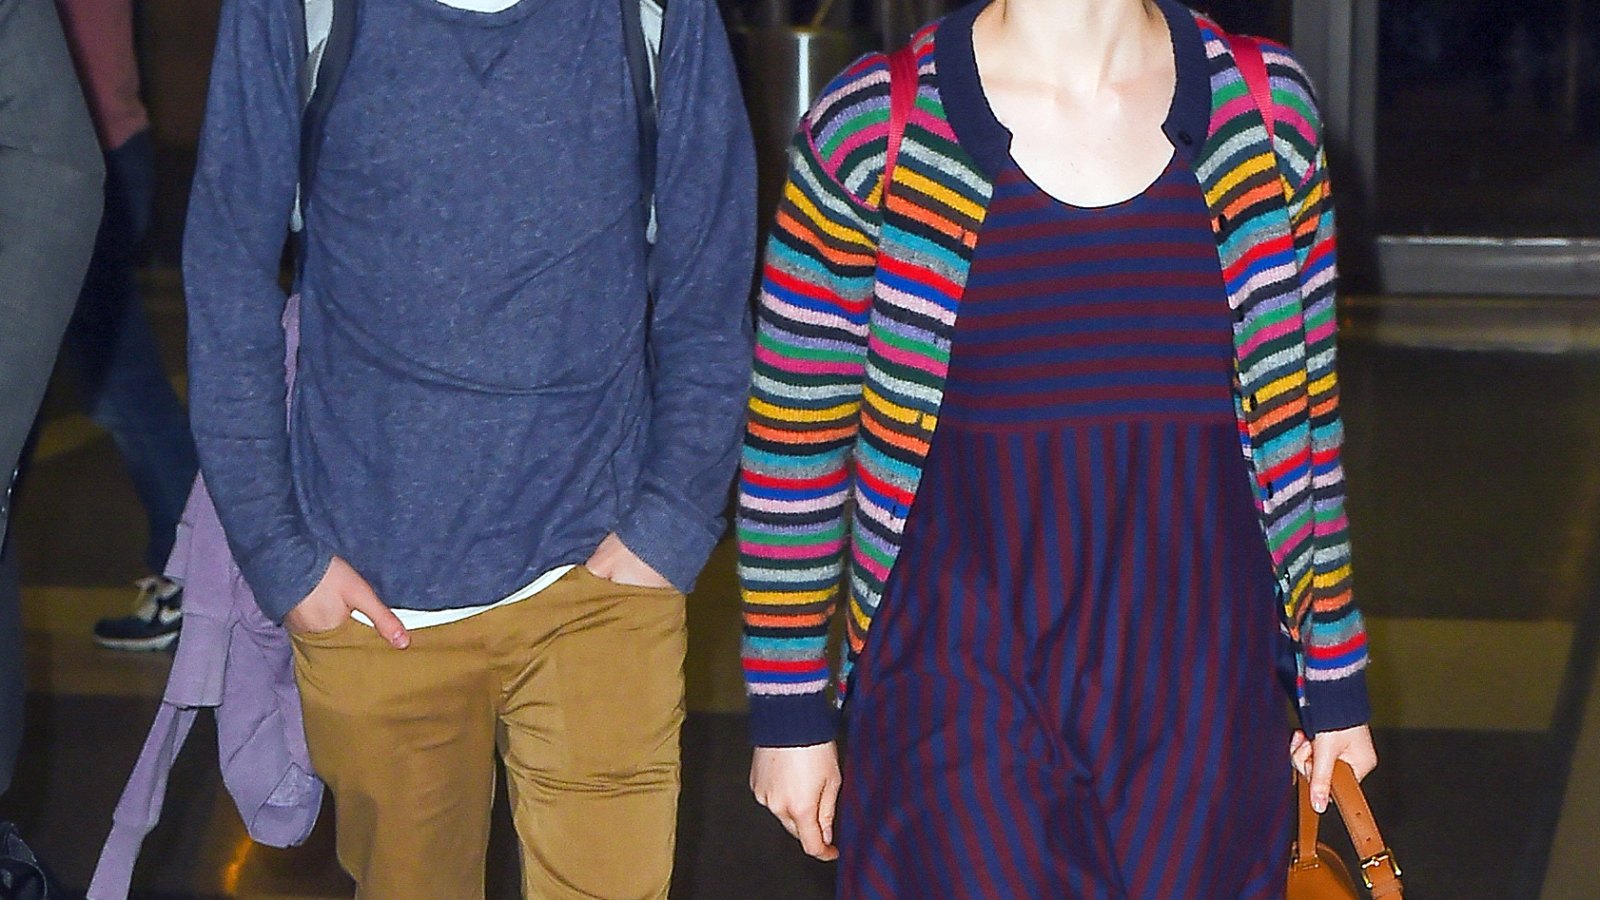 Jesse Eisenberg and Mia Wasikowska at LAX on November 9, 2014